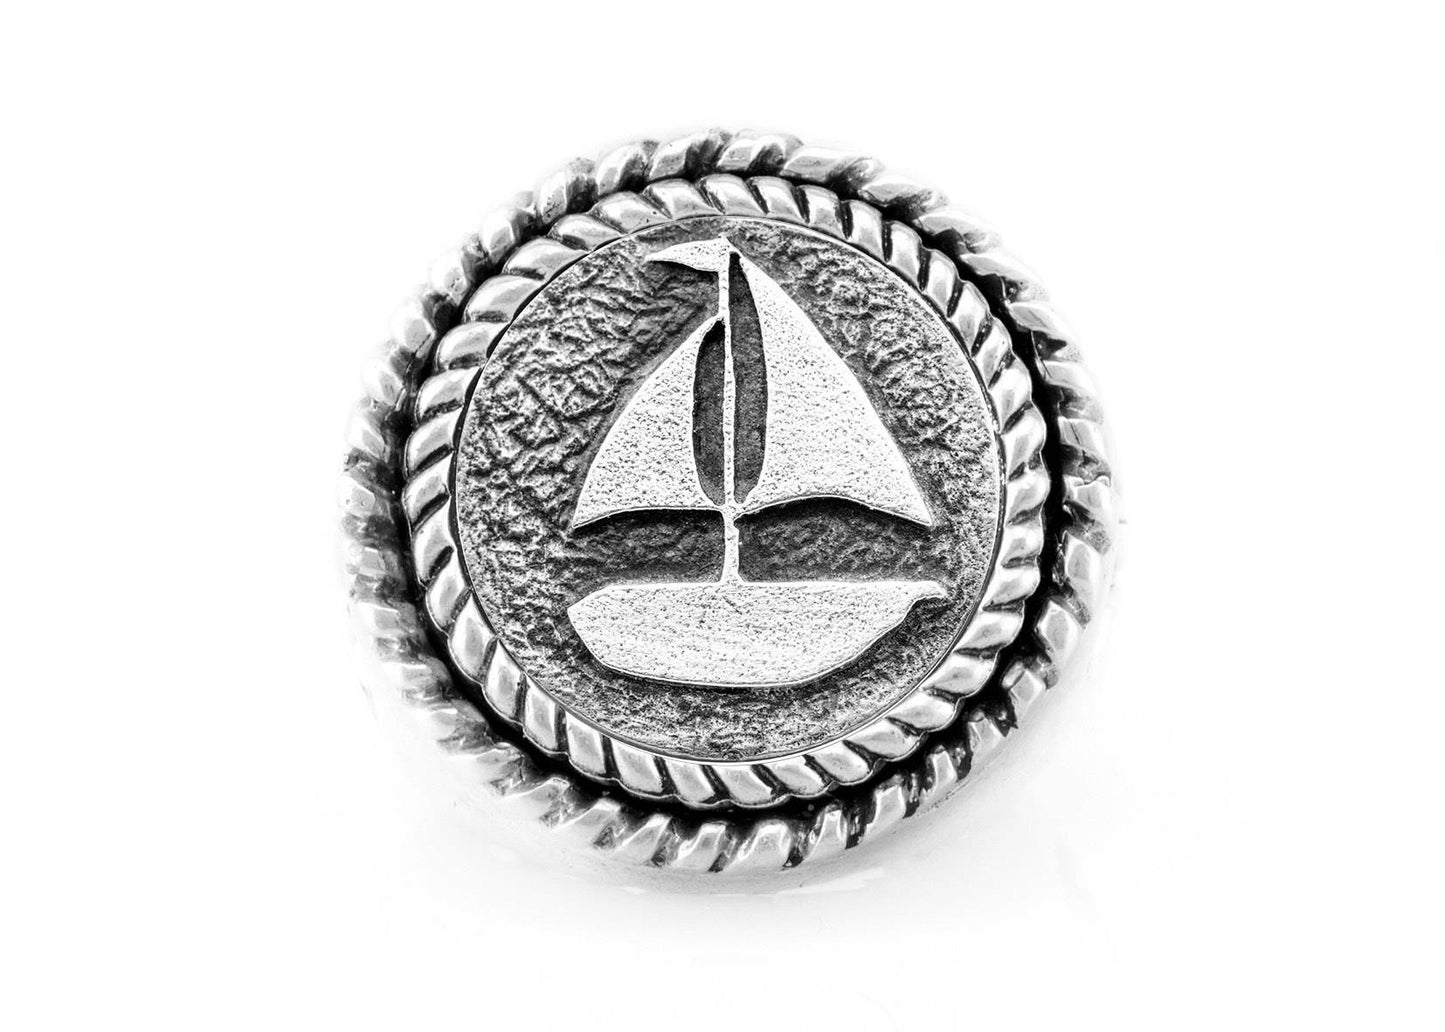 Sea Boat Medallion Ring with the fleur de lis symbol